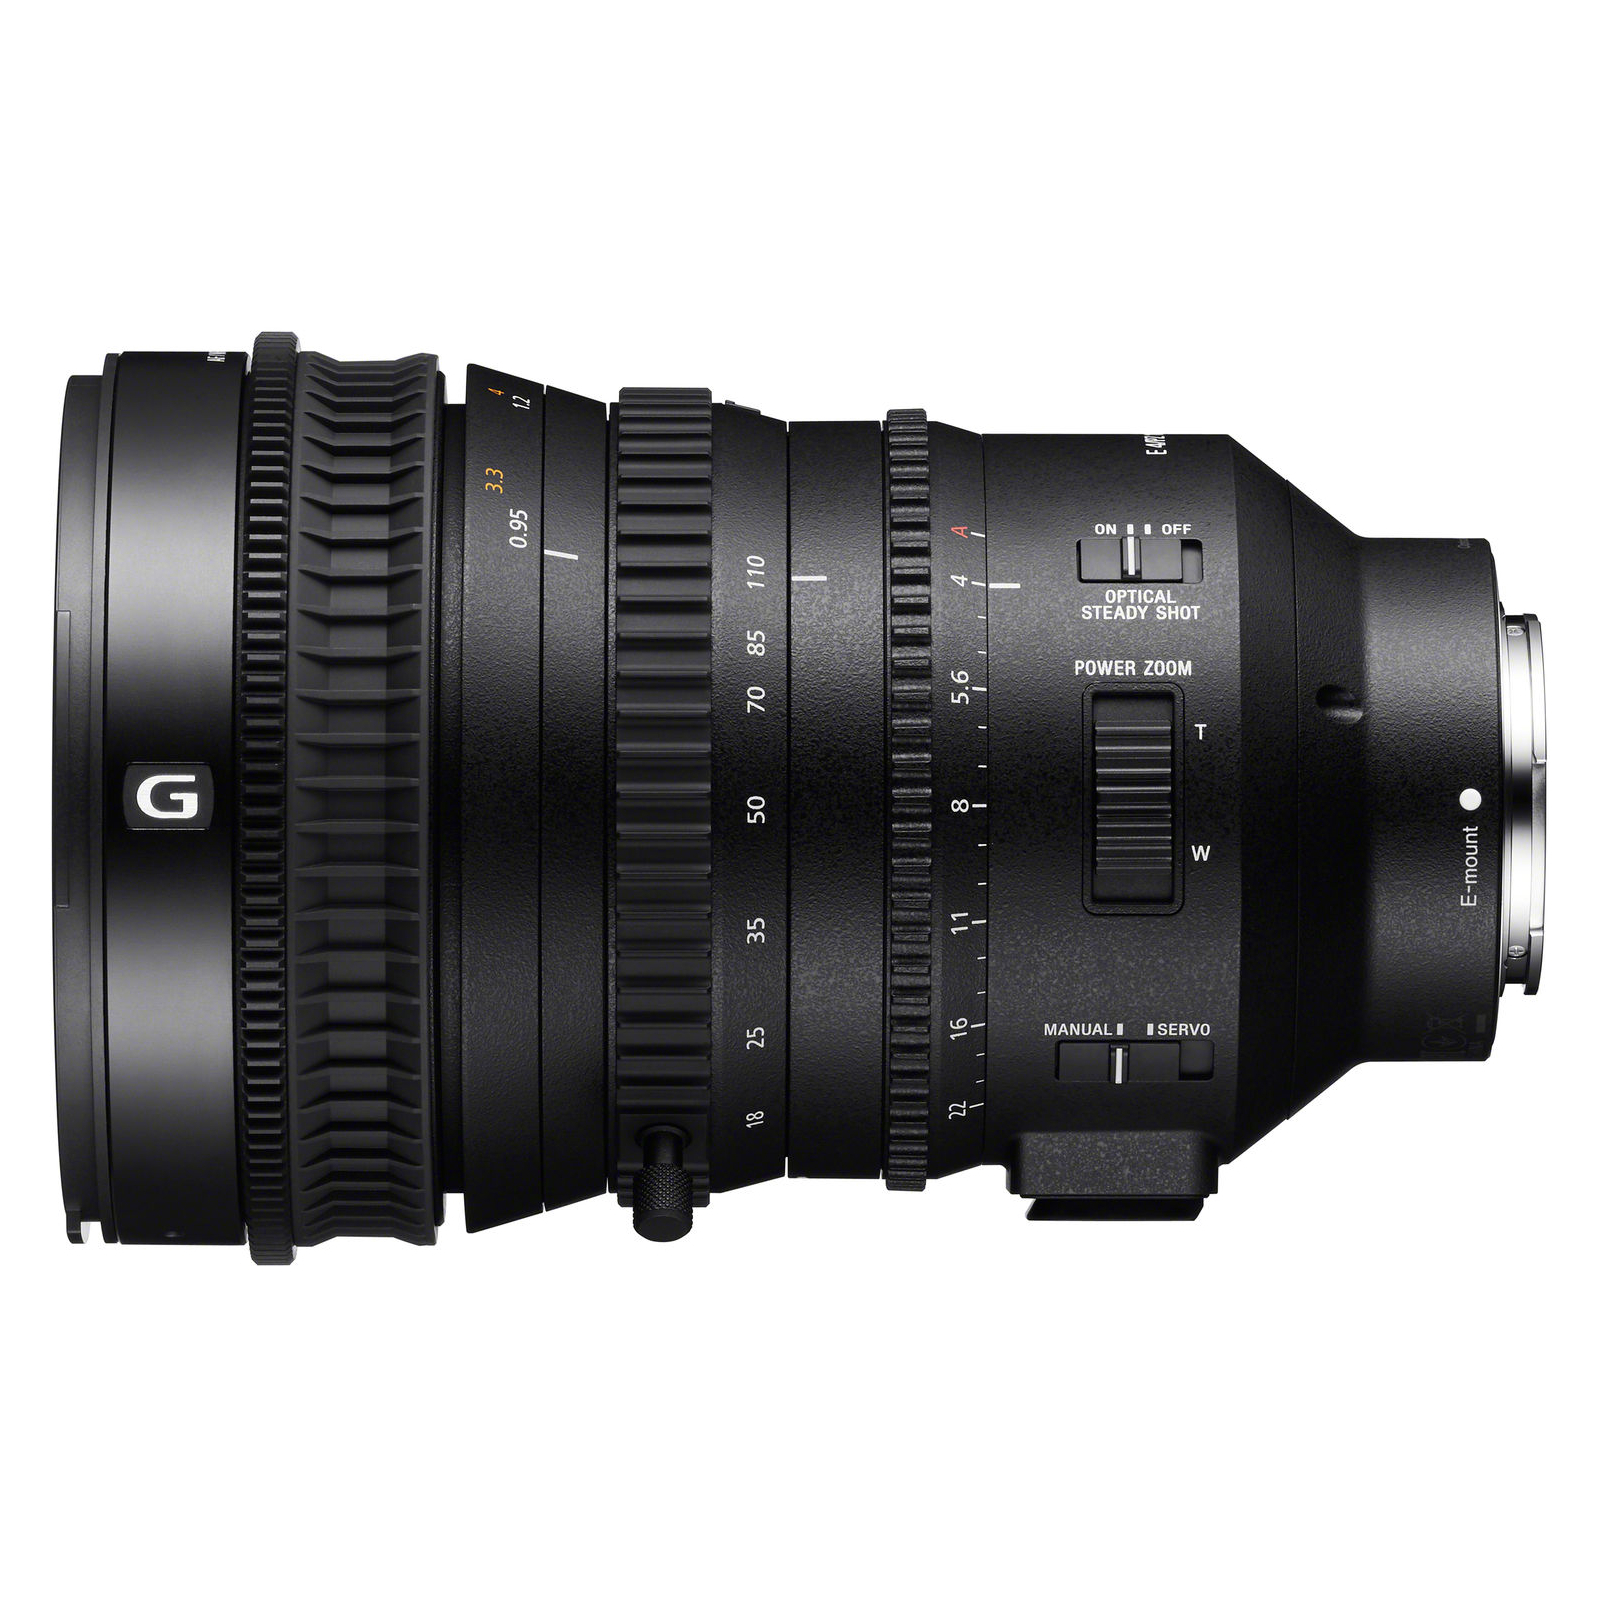 Об'єктив Sony 18-110mm, f/4.0 G Power Zoom (E-mount) (SELP18110G.SYX) зображення 2